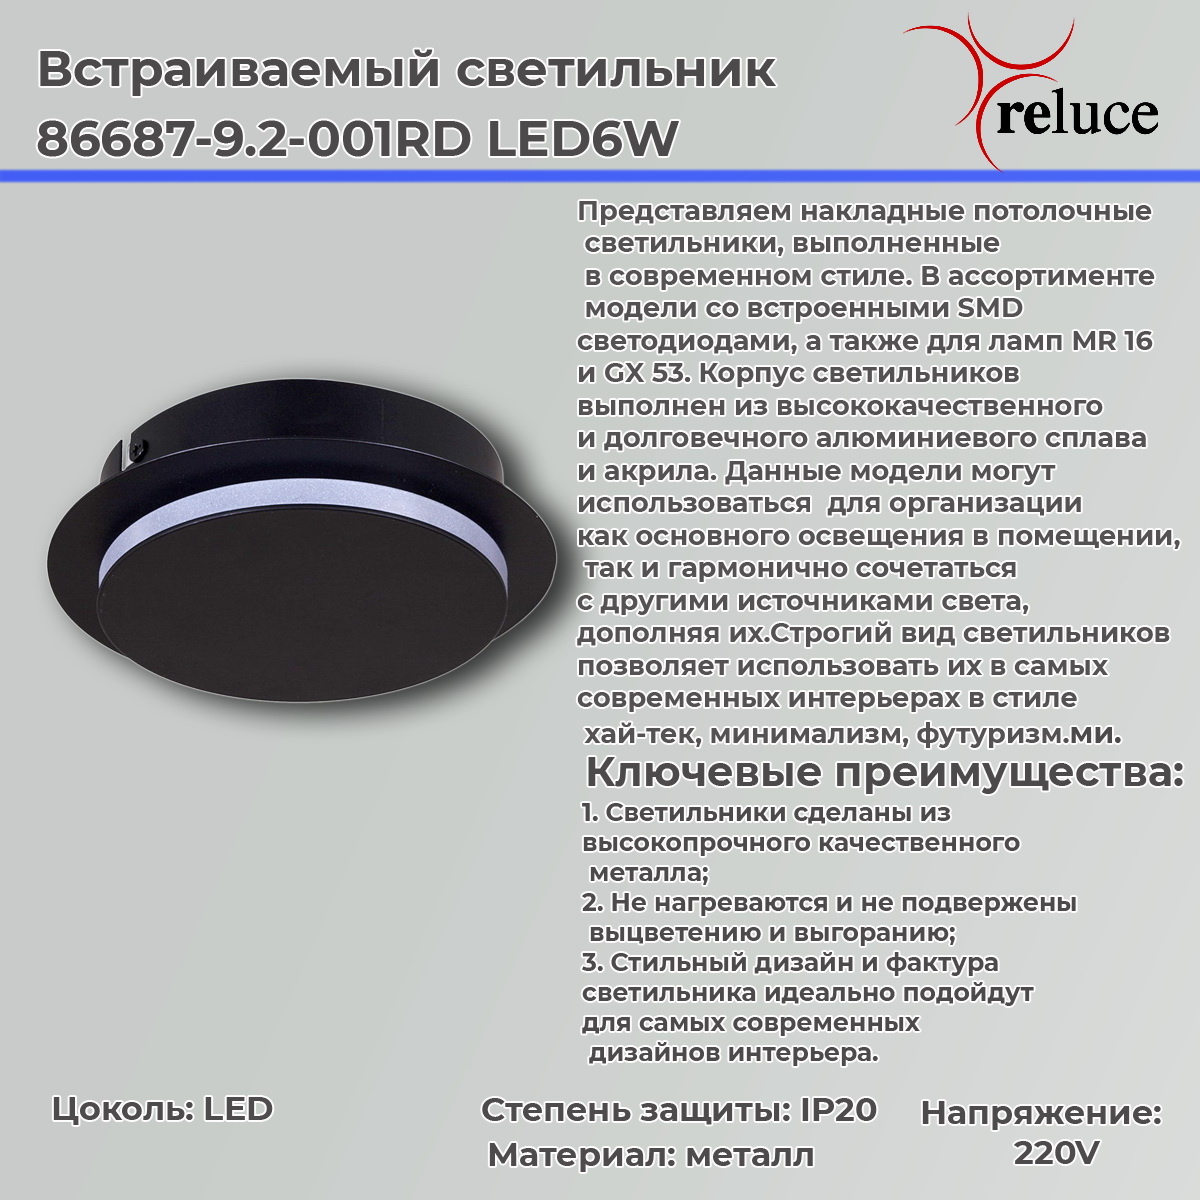 Настенный светильник Reluce 86687-9.2-001RD LED6W BK